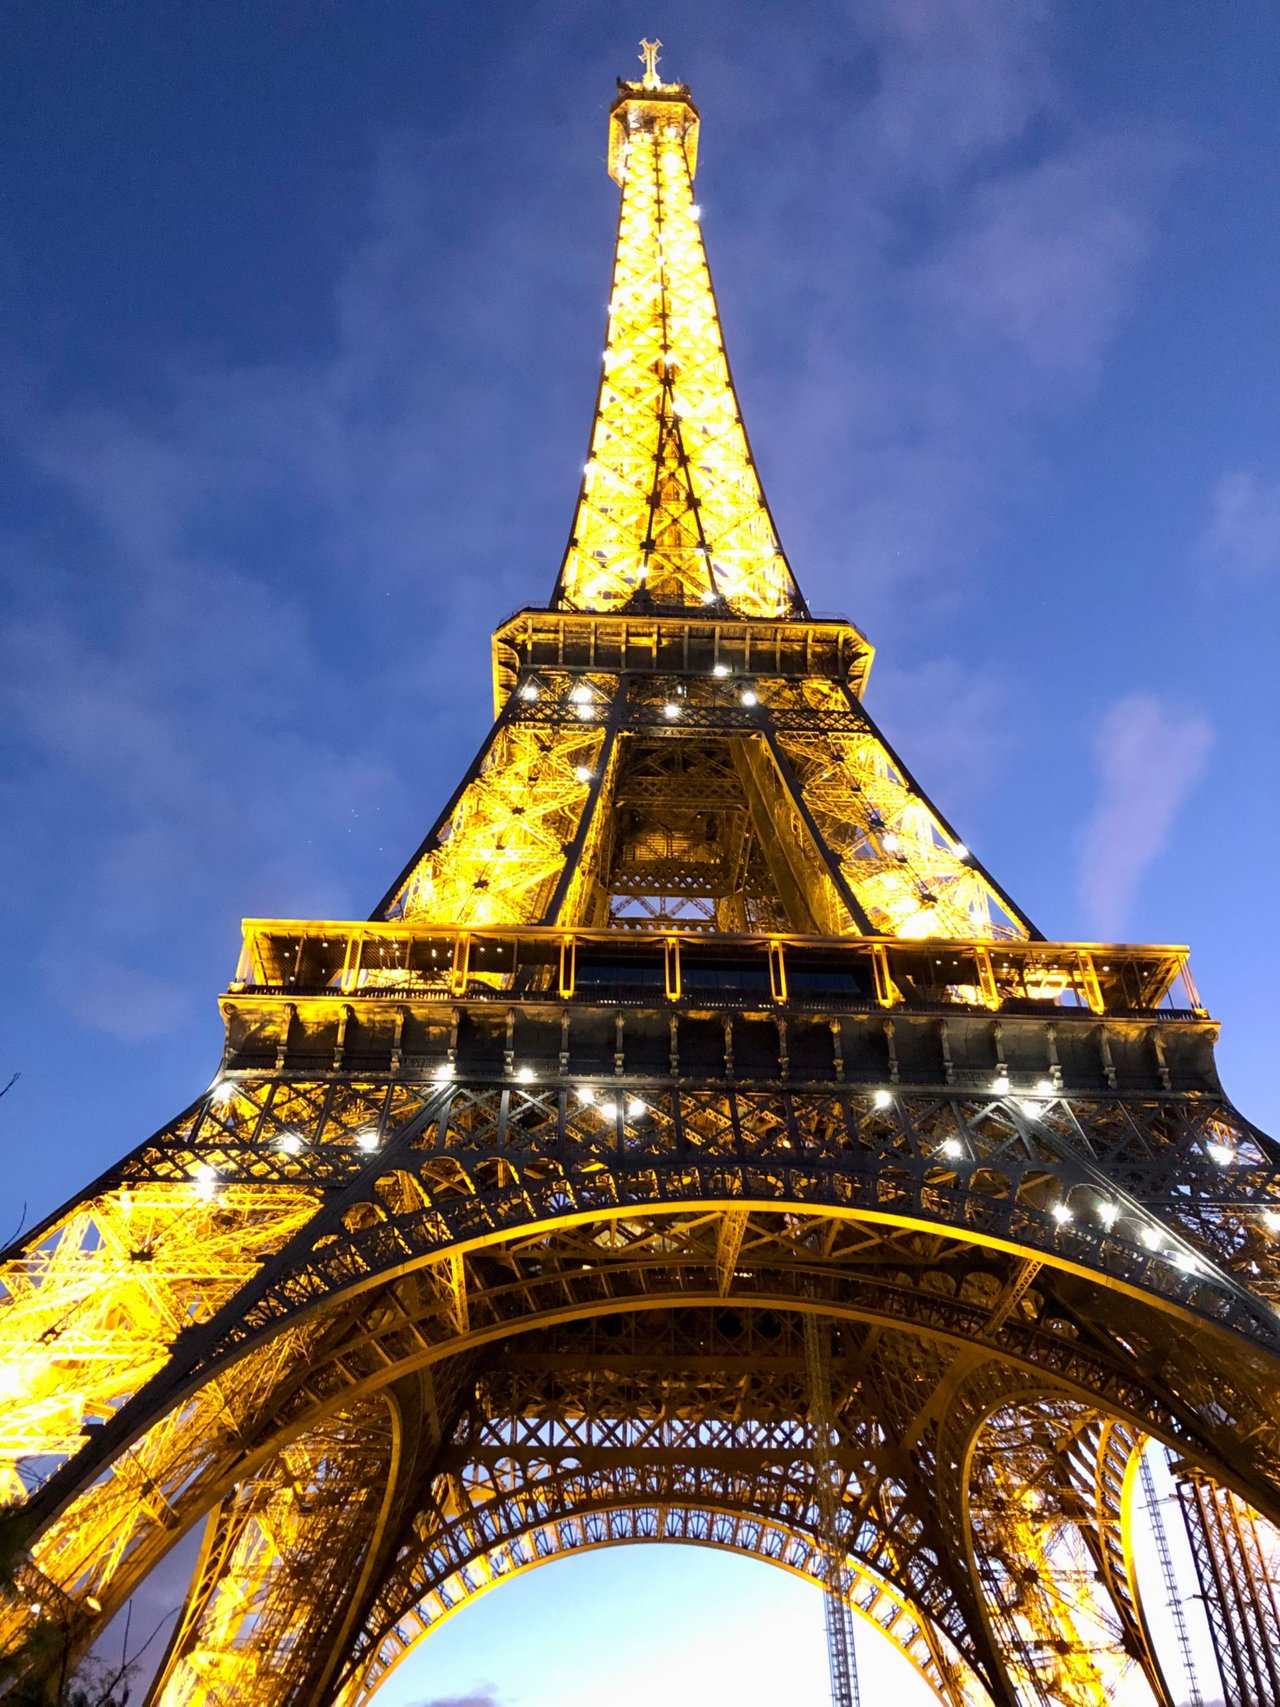 Eiffel Tower Torre del Oro , eiffel tower transparent background